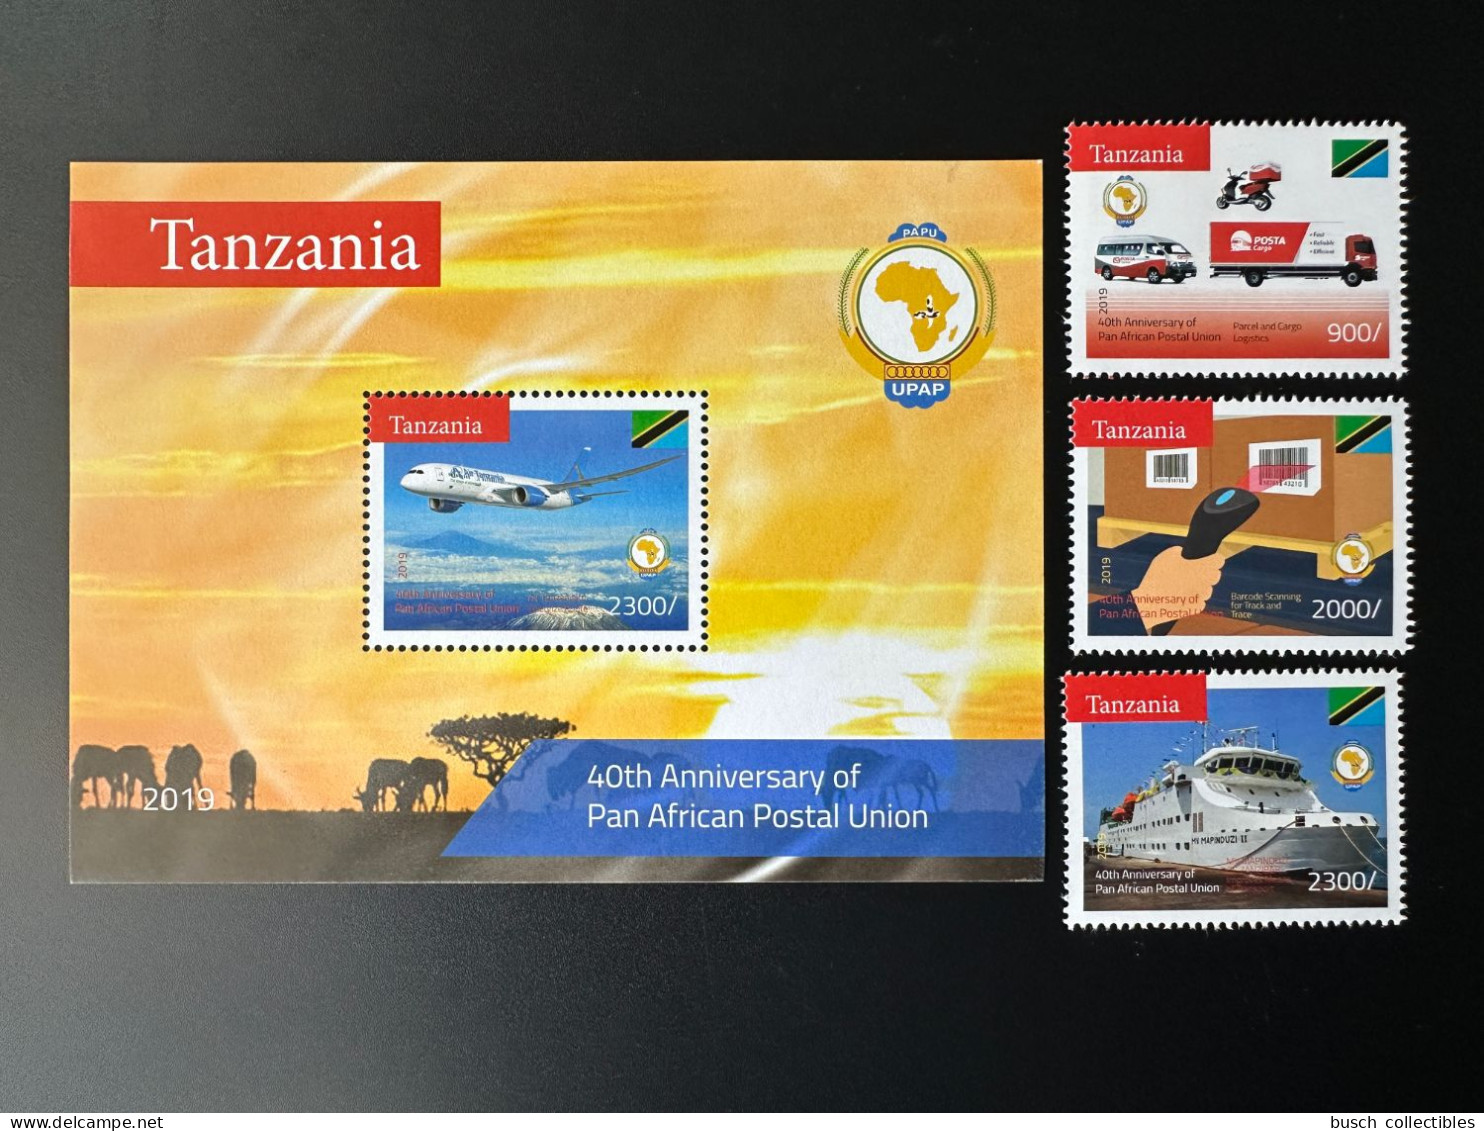 Tanzania Tanzanie Tansania 2019 / 2020 Mi. 5447 - 5449 Bl. 716 PAPU UPAP 40th Anniversary Airplane Flugzeug Avion Ship - Airplanes